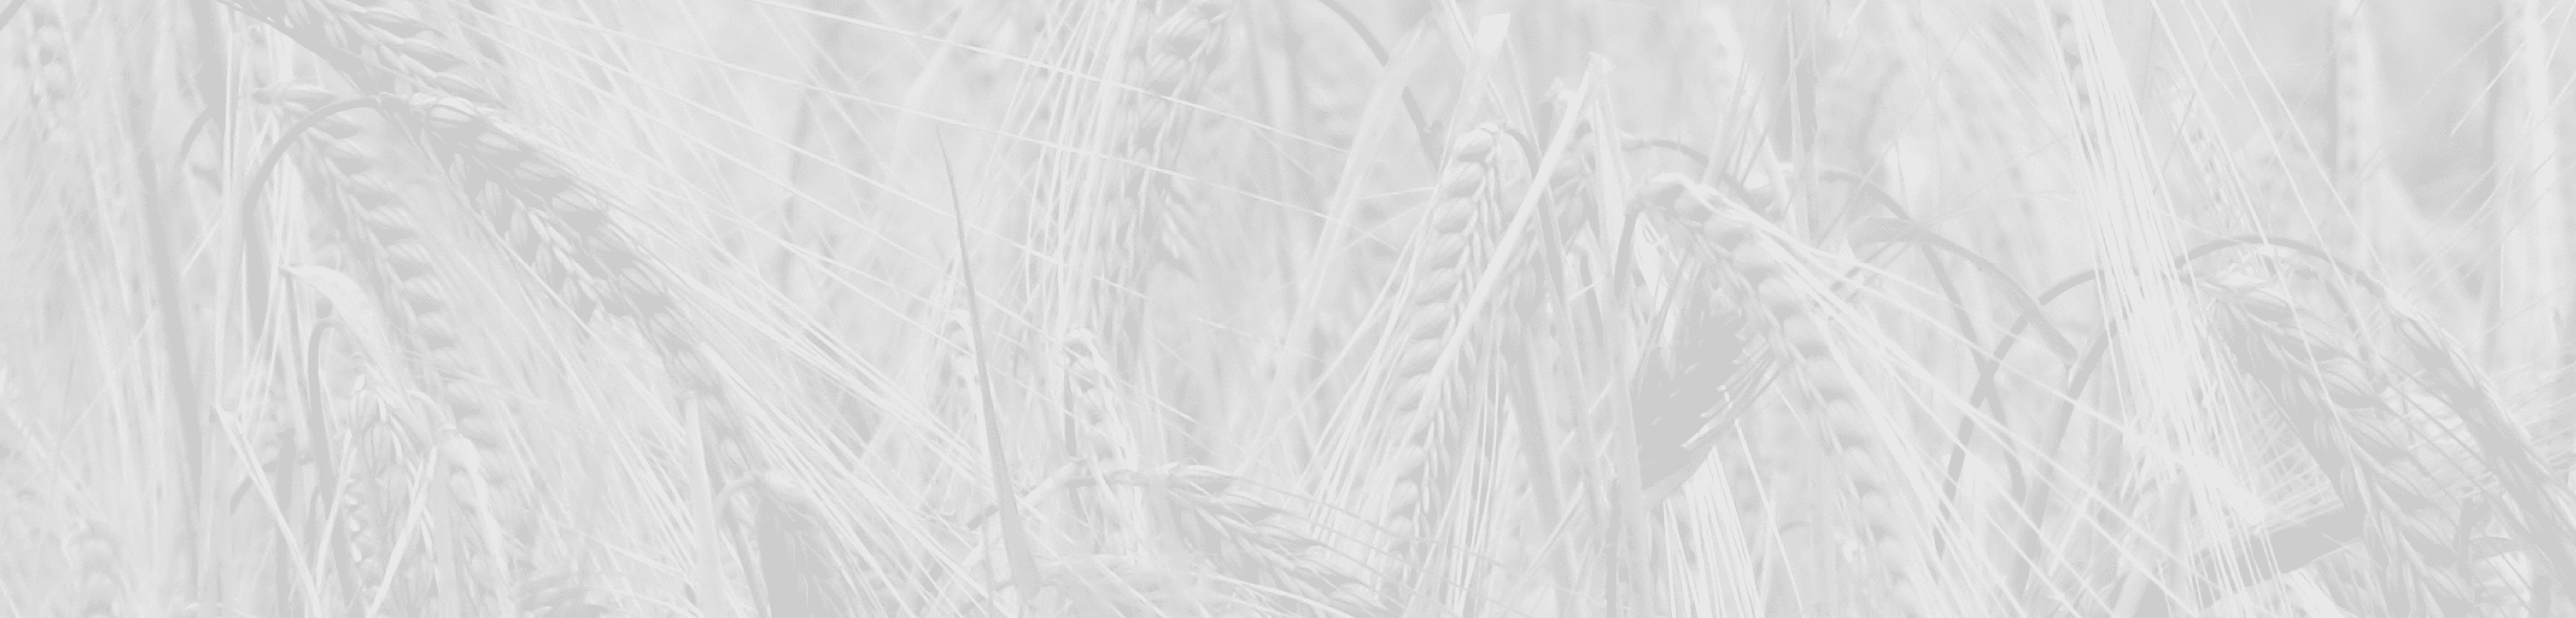 barley background